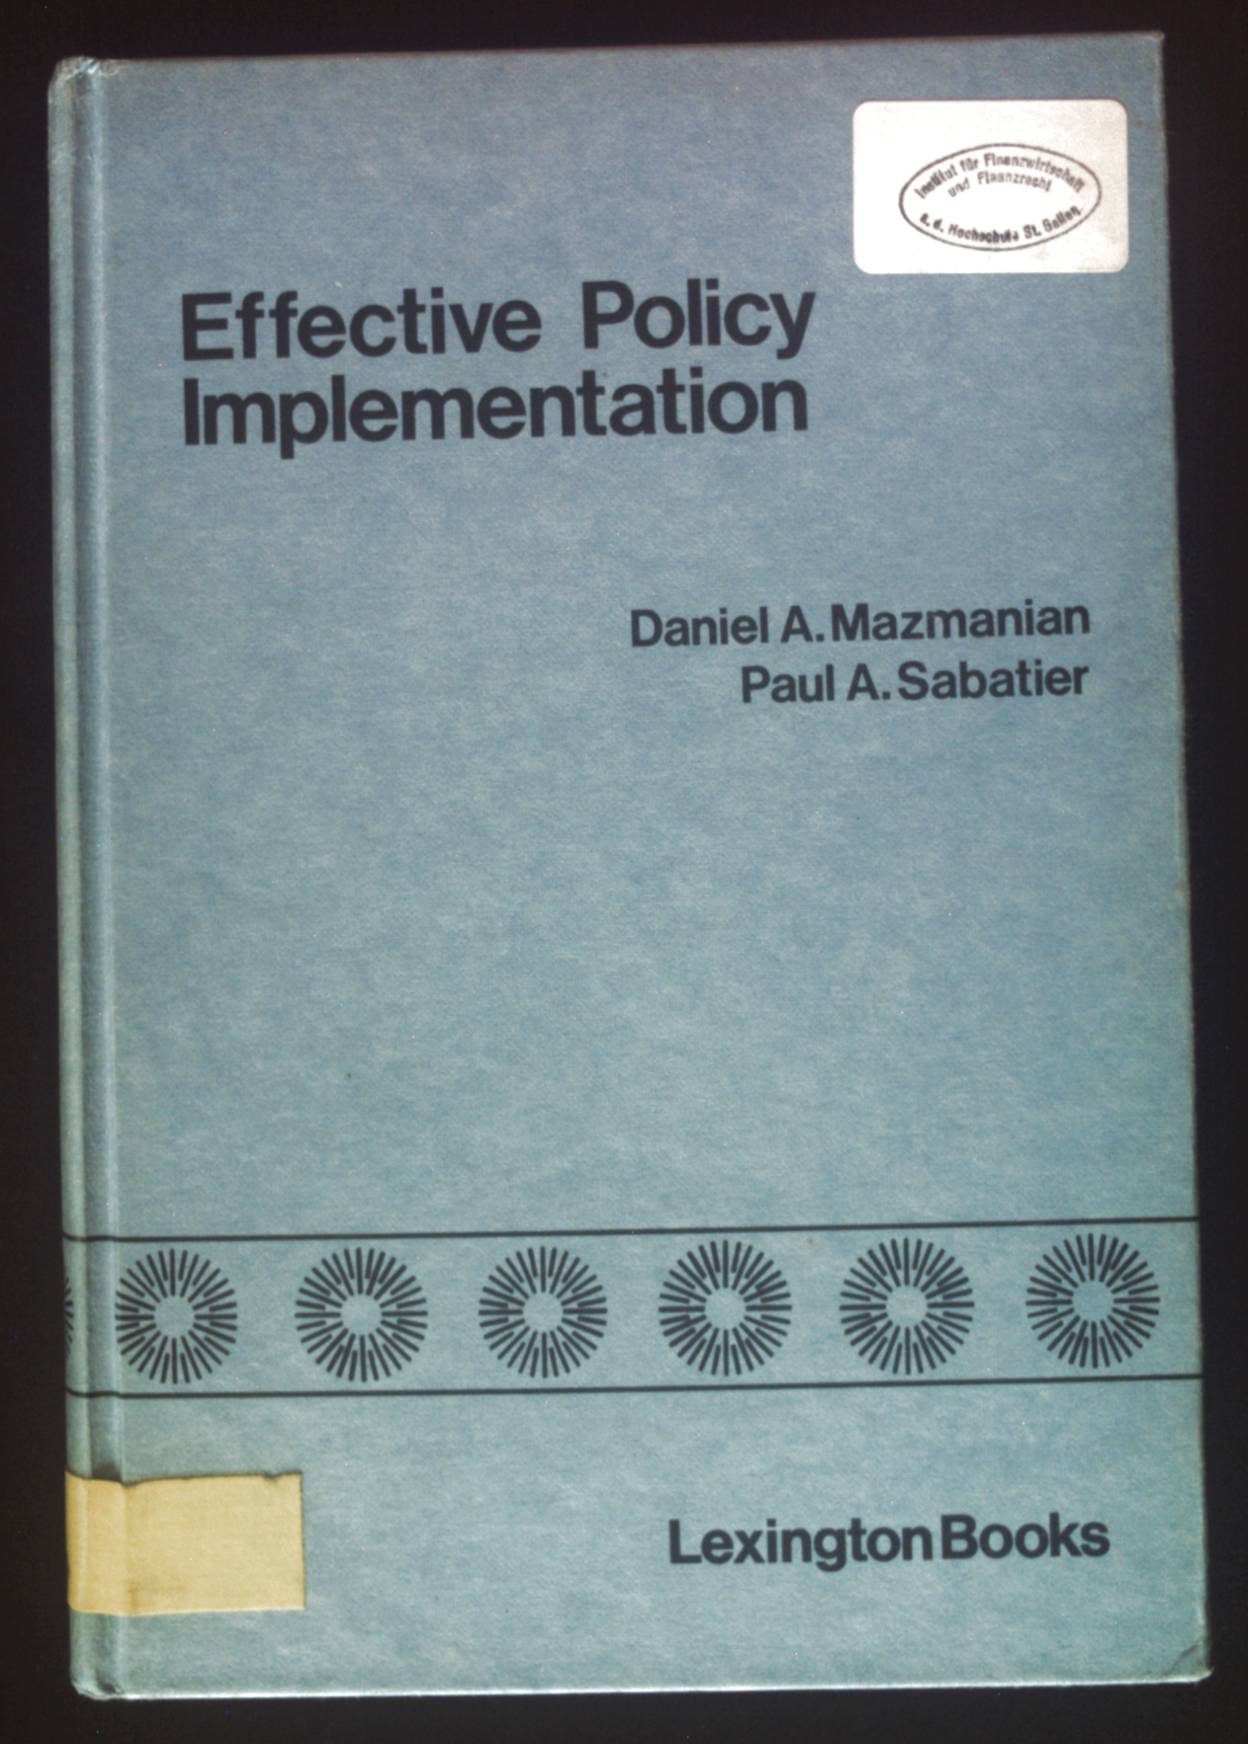 Effective Policy Implementation - Mazmanian, Daniel A. and Paul A. Sabatier